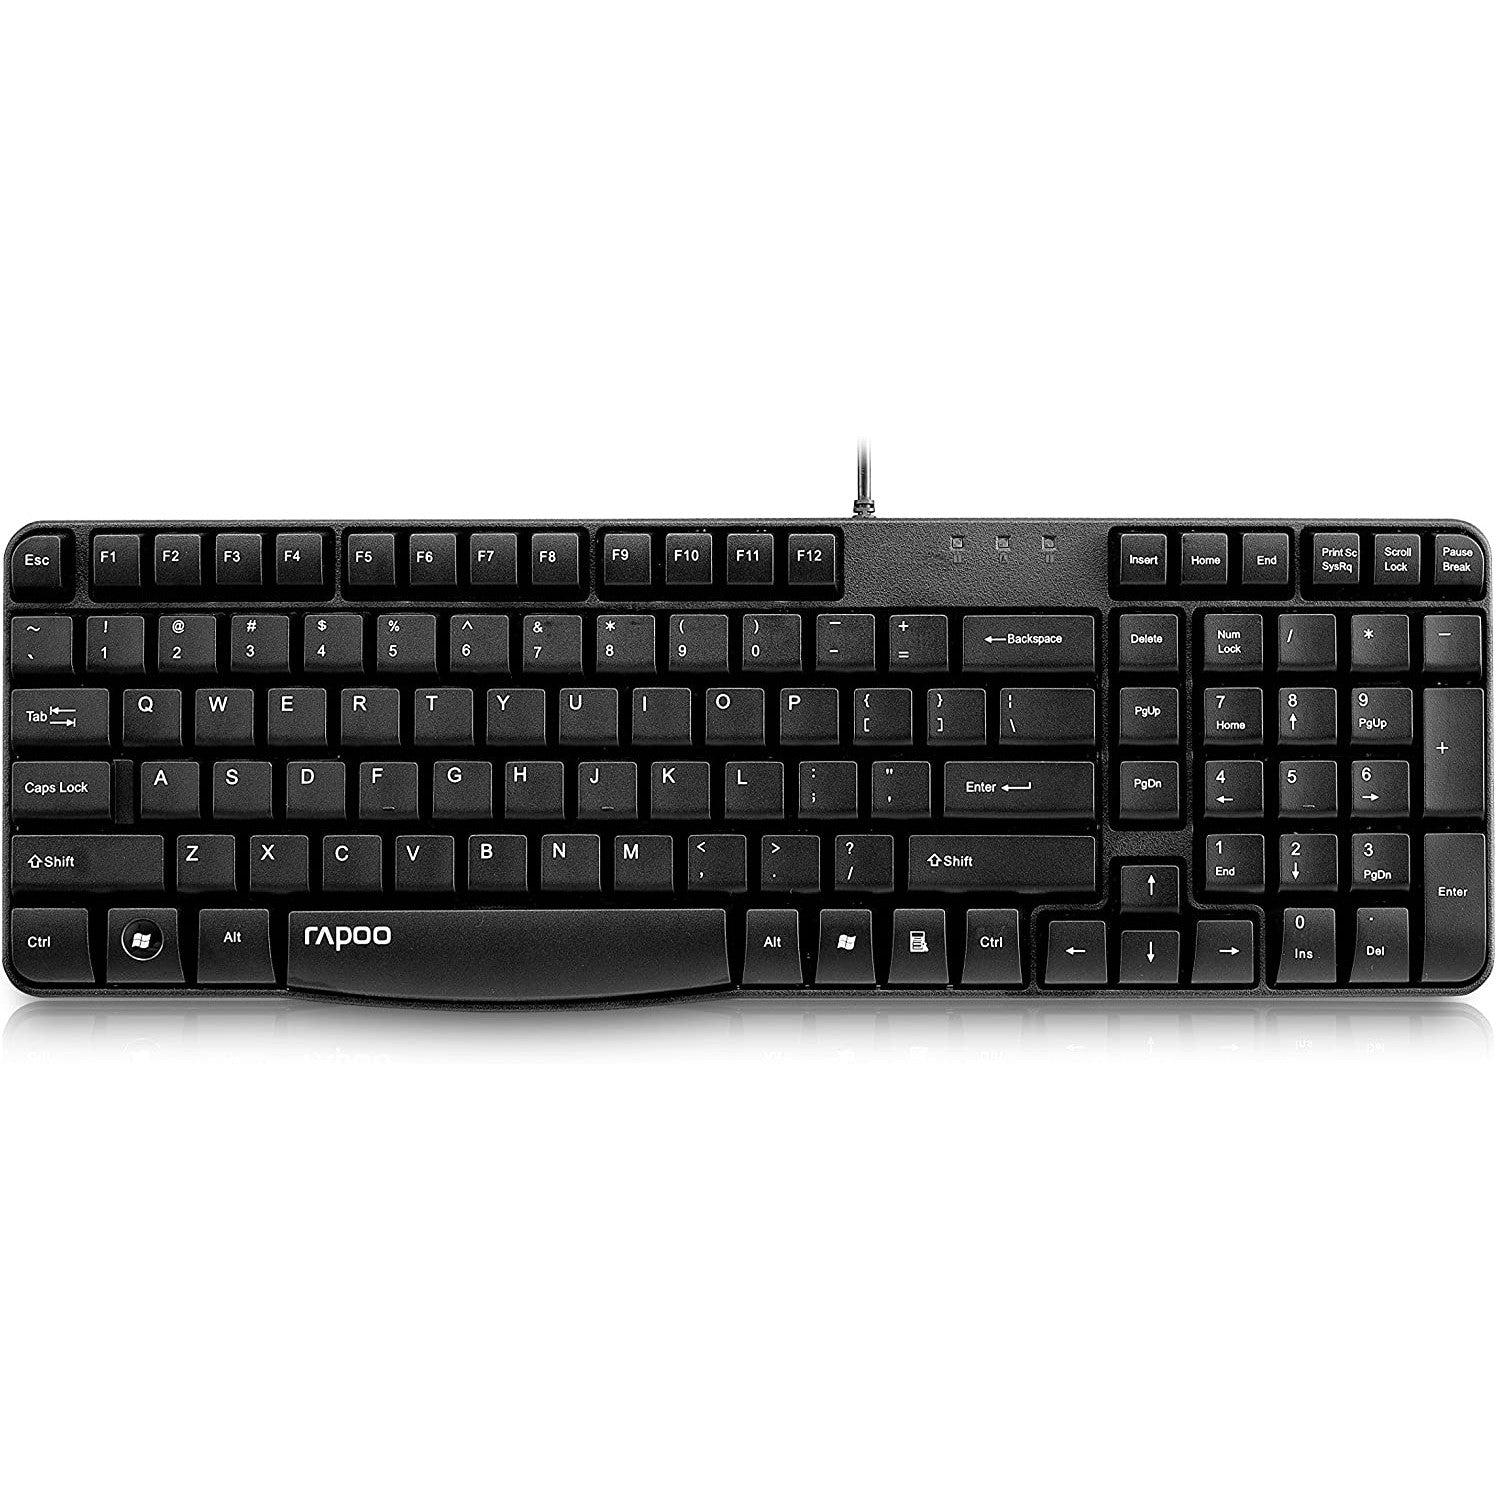 Rapoo N2400 Wired Spill-Resistant Keyboard, Black - Refurbished Good